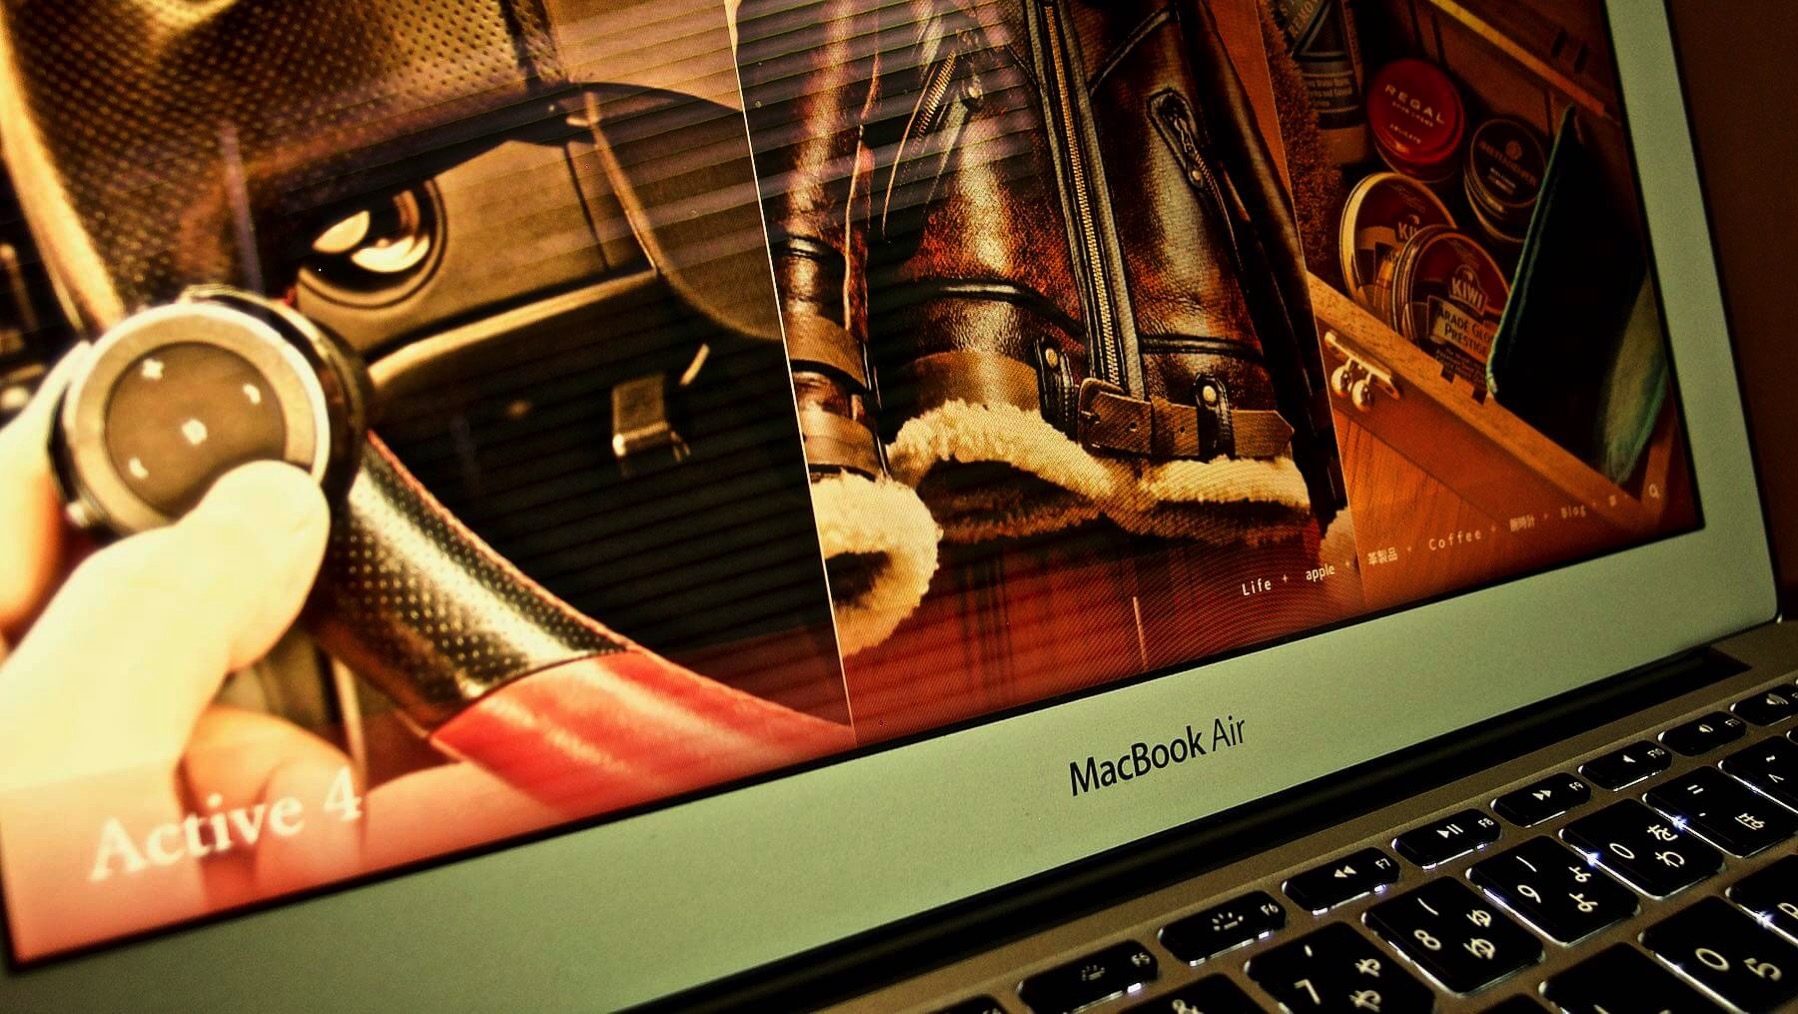 04 Macbook Air 2013 11inch